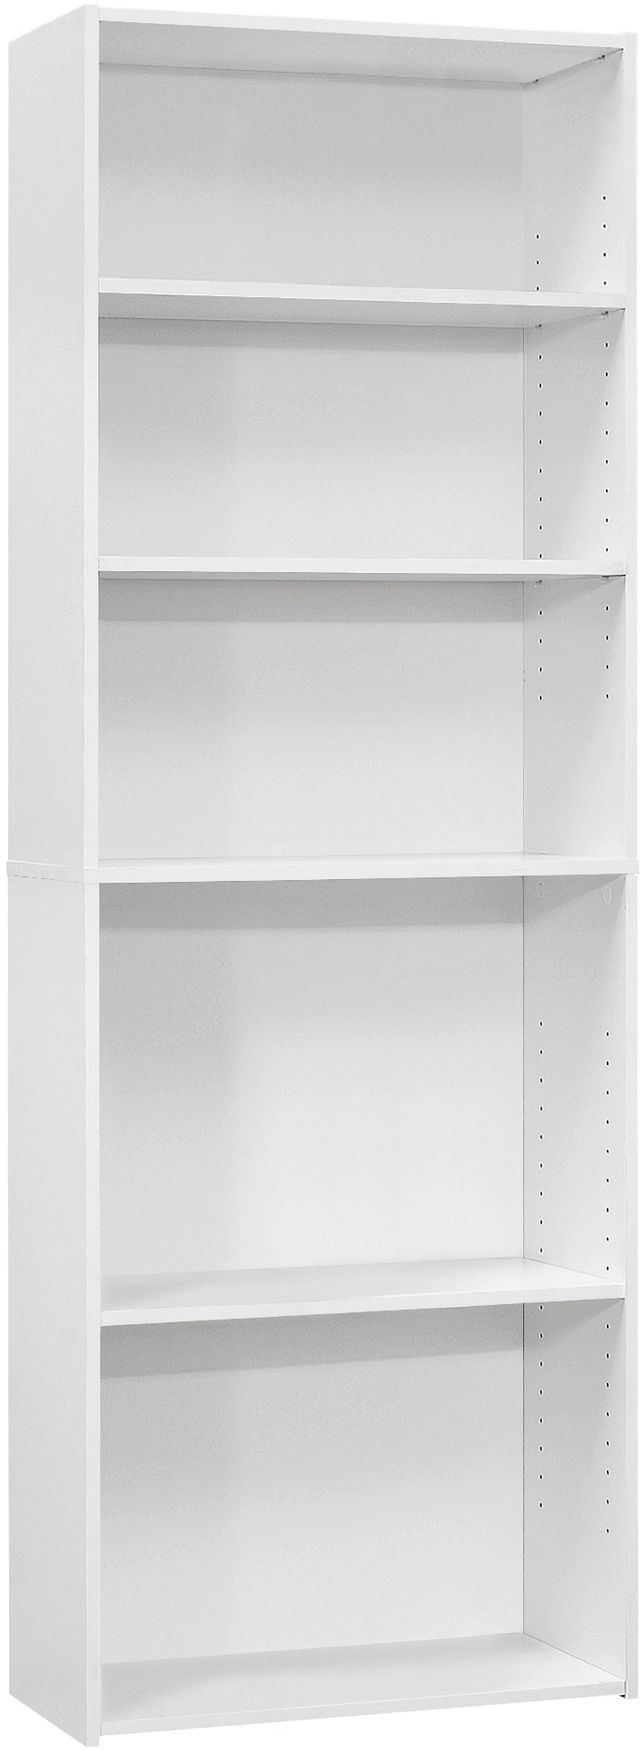 Monarch Specialties Inc. 72"H White 5 Shelves Bookcase